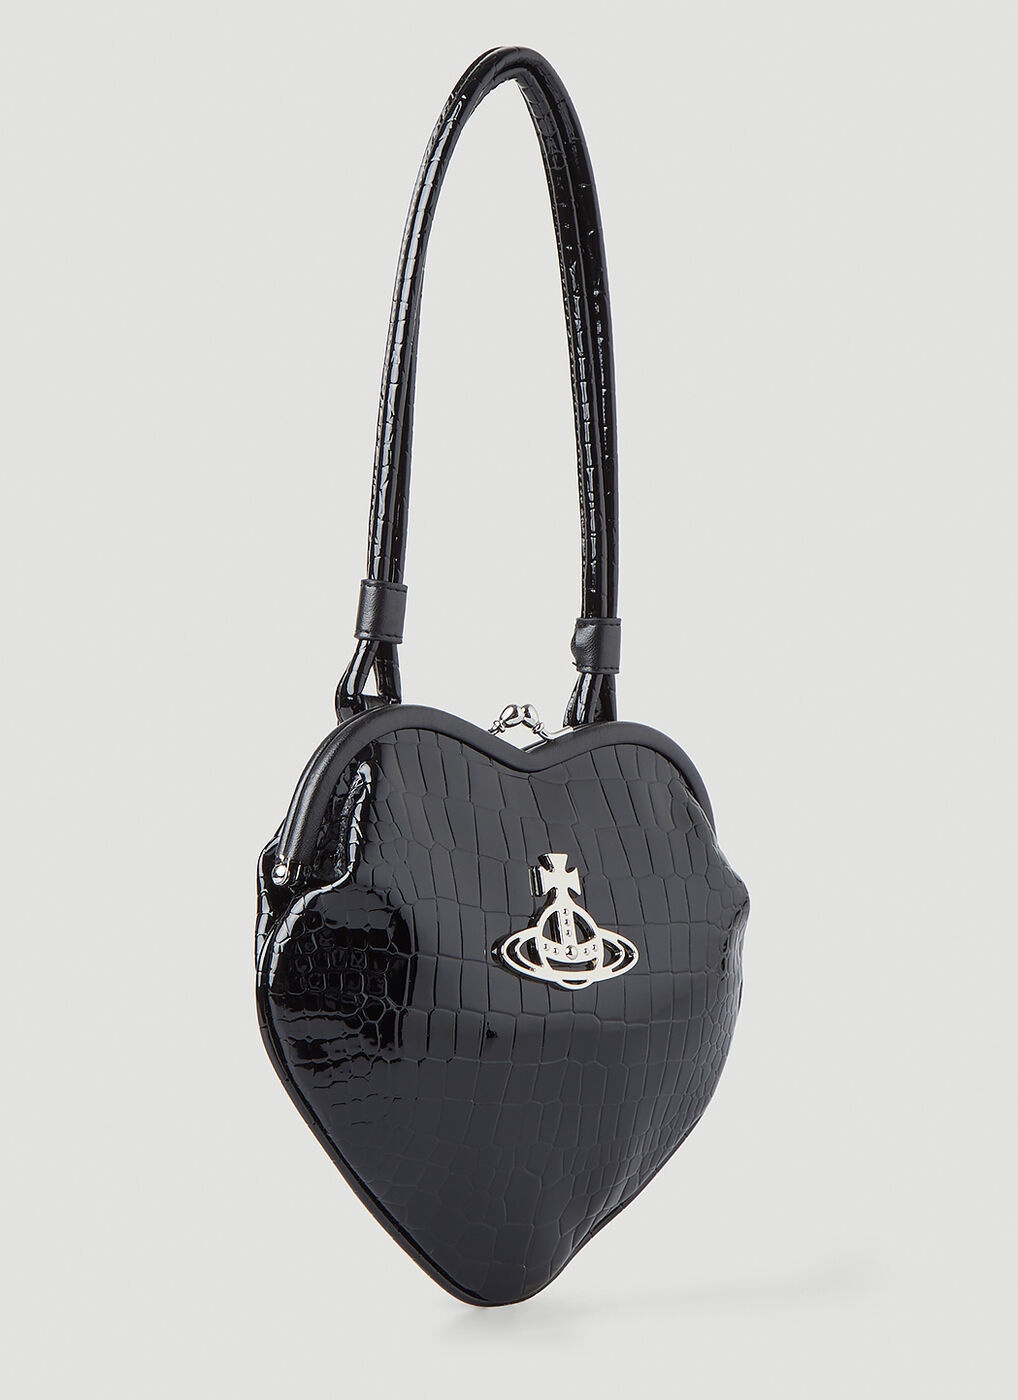 Vivienne Westwood Leather Embossed Heart Bag